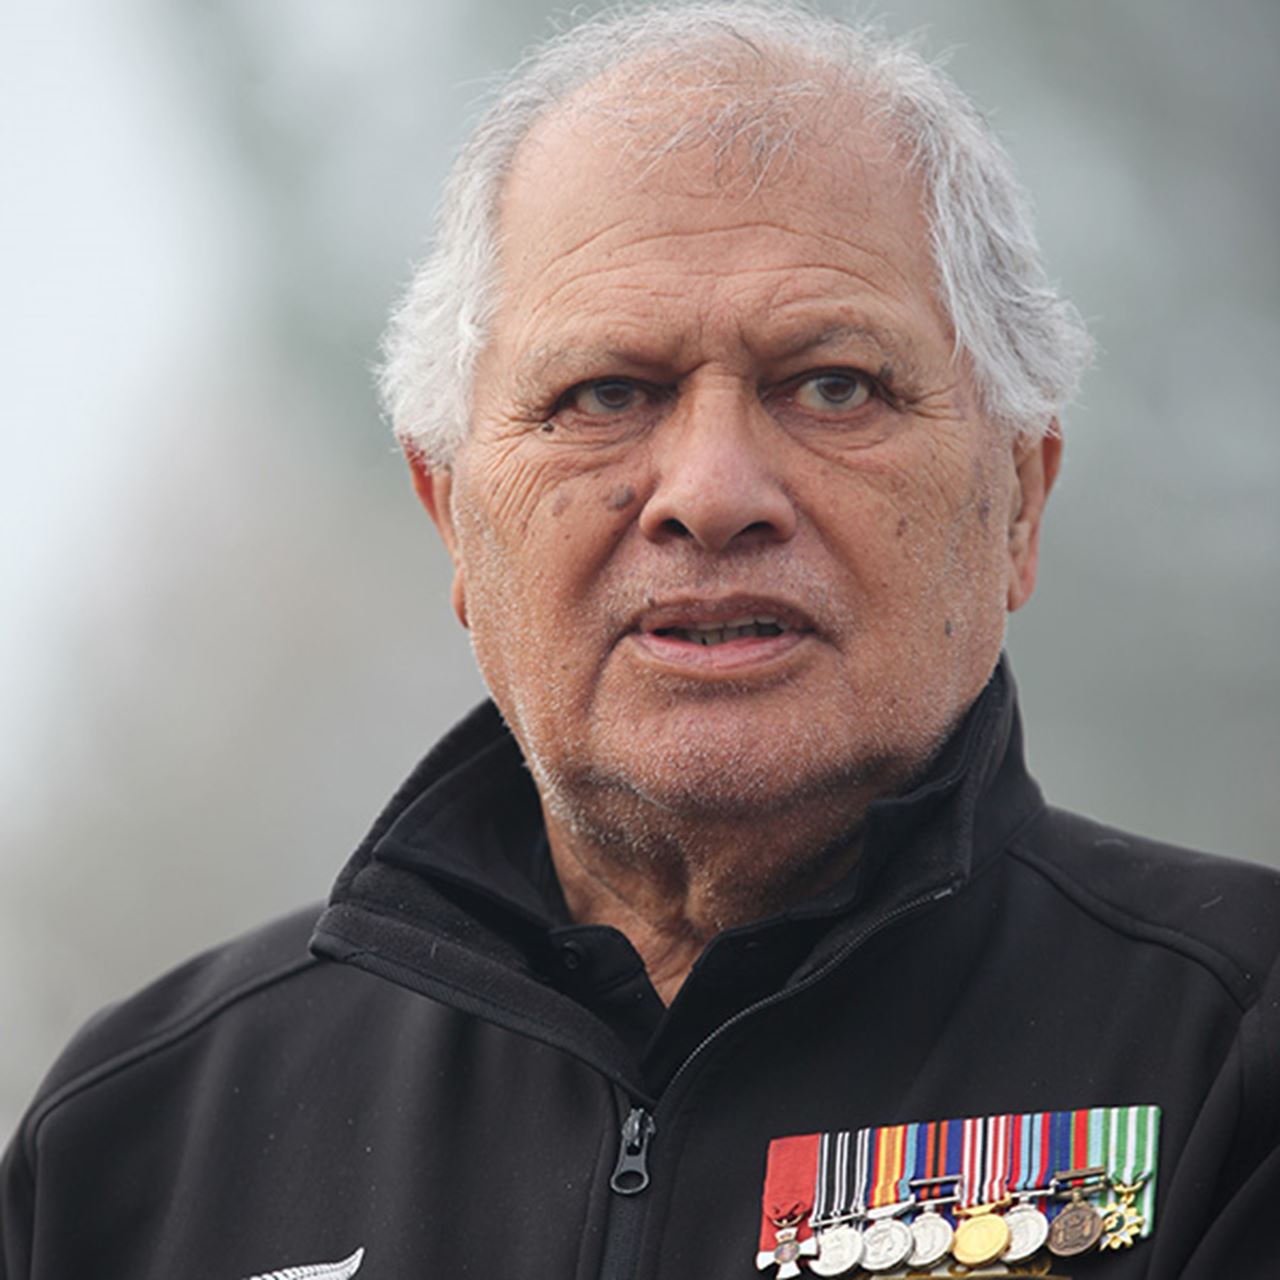 Tā Wira was a soldier, senior public servant, former CEO of Oranga Tamariki and a founder of Te Whare Wānanga o Awanuiārangi